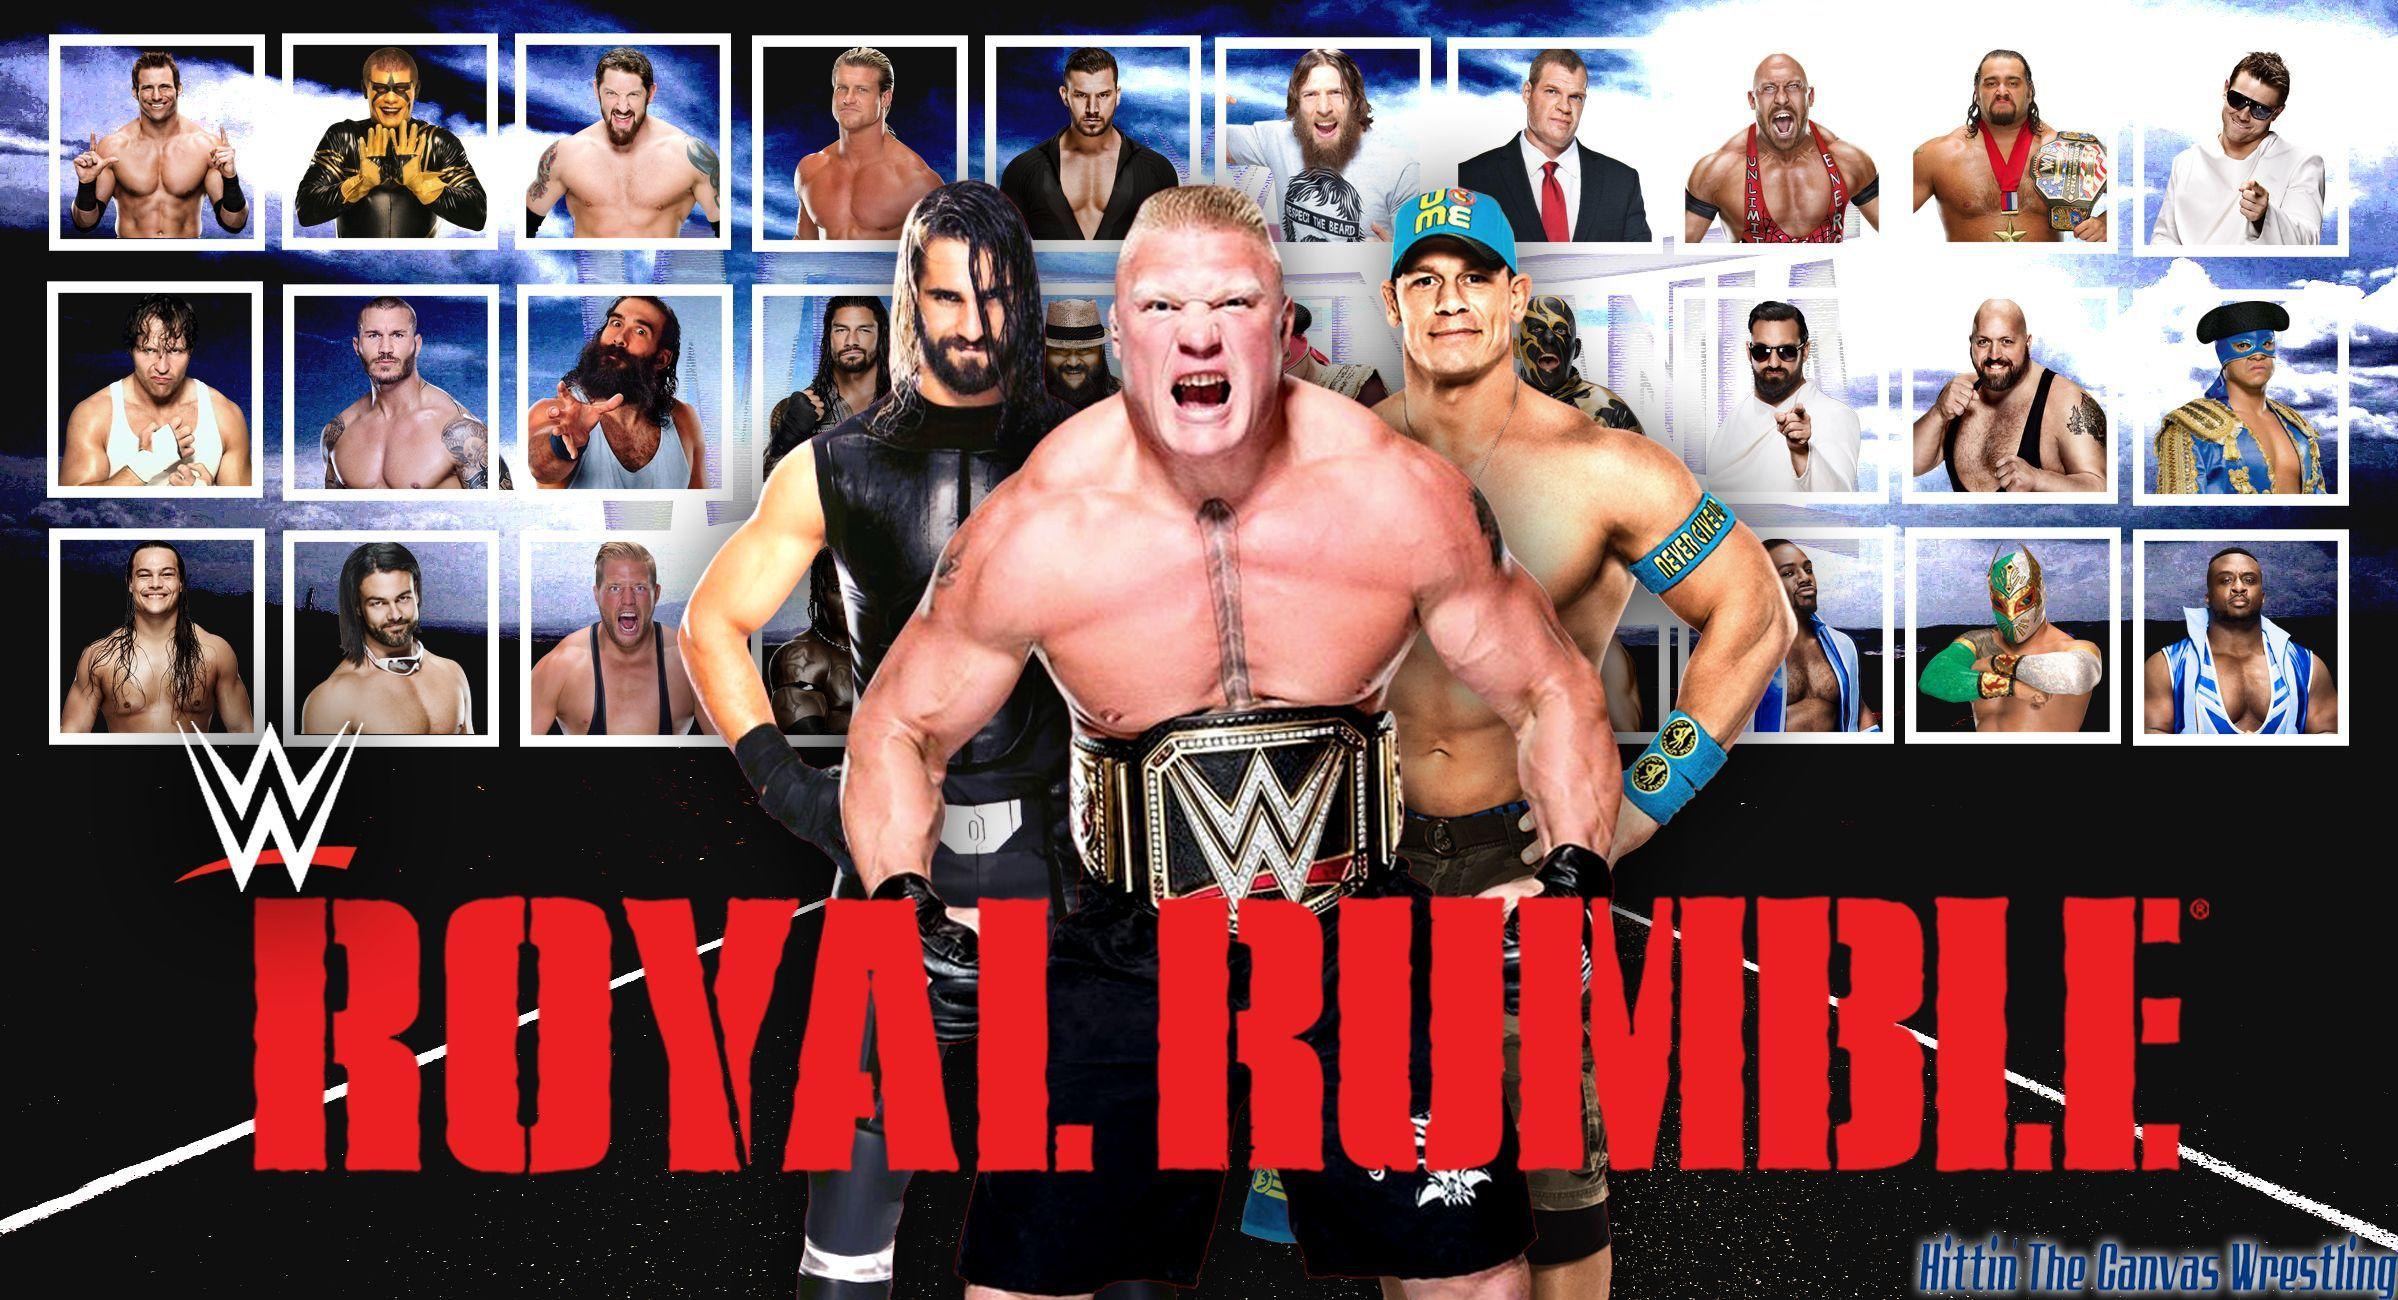 WWE Royal Rumble Wallpaper. Hittin' The Canvas